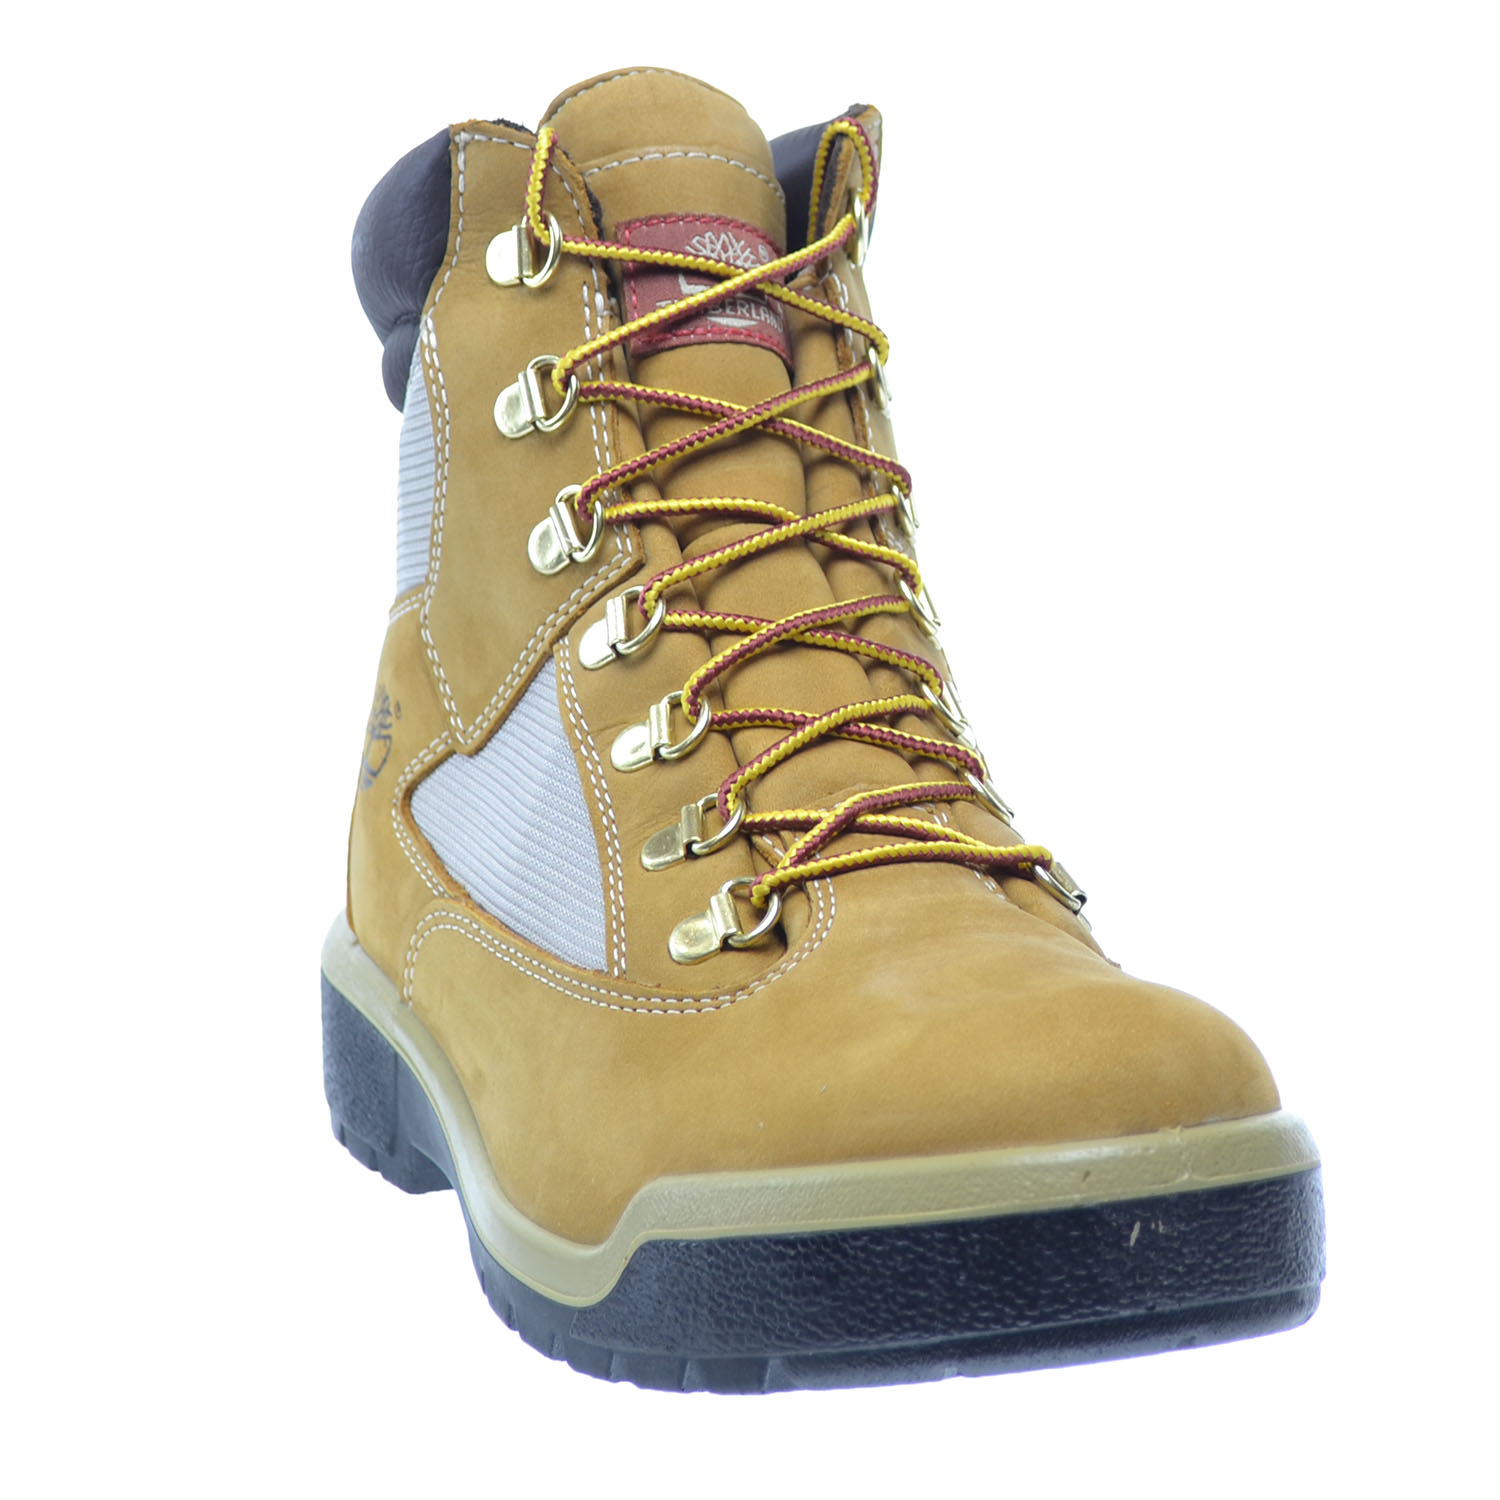 Timberland Men's 6 Inch Nongtx Field Boots Wheat tb098520 | eBay